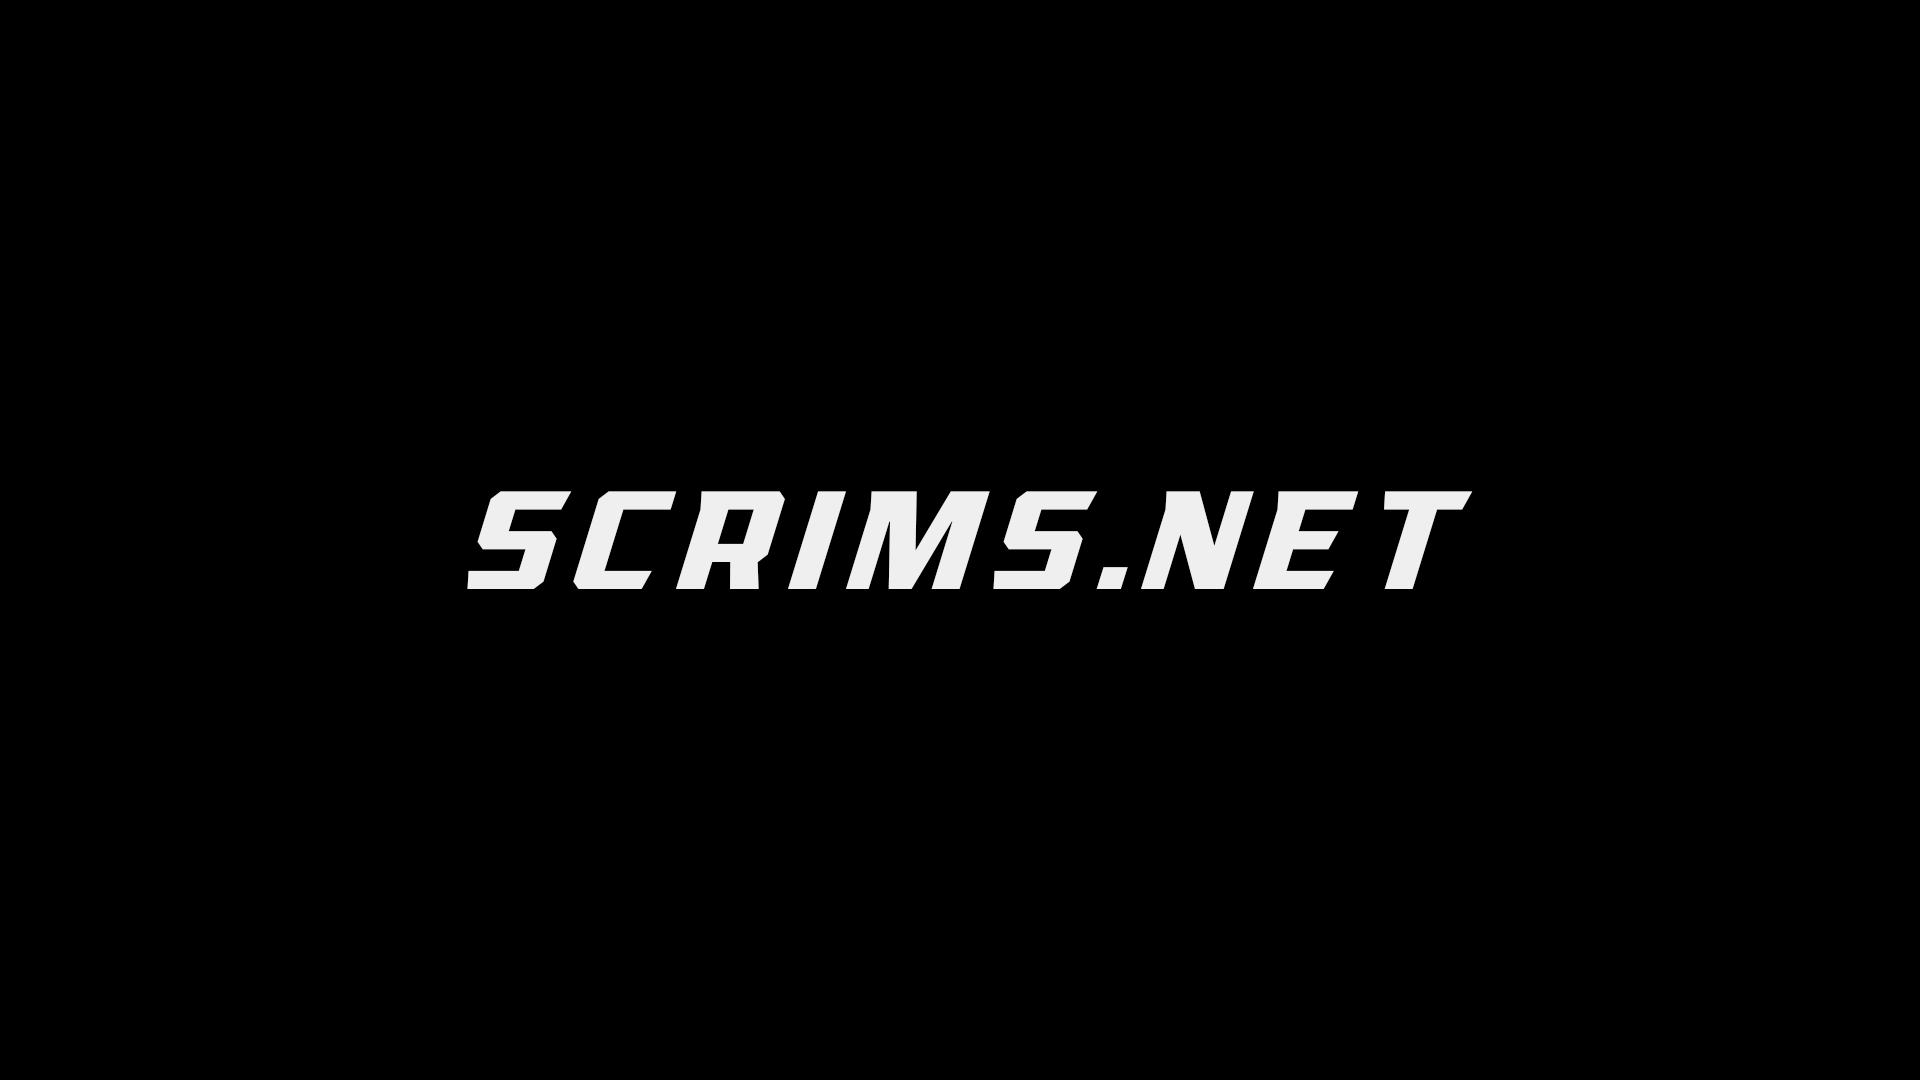 Fortnite Discord Servers For Scrims Pro Scrims Scrims Net